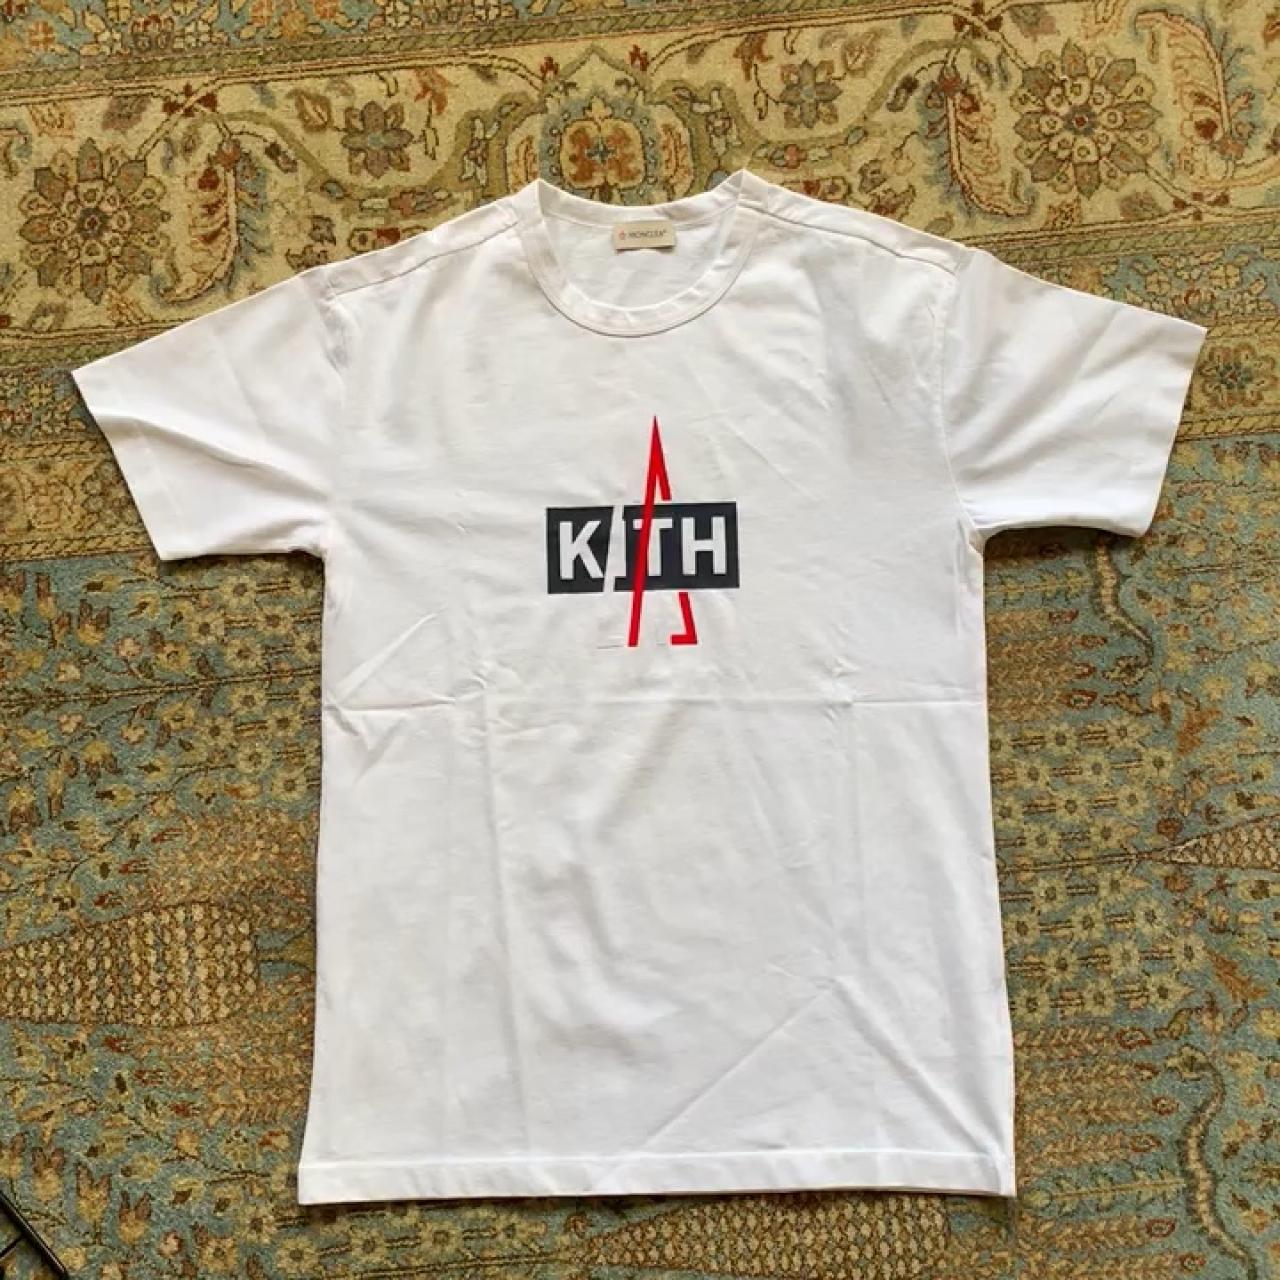 kith moncler t shirt